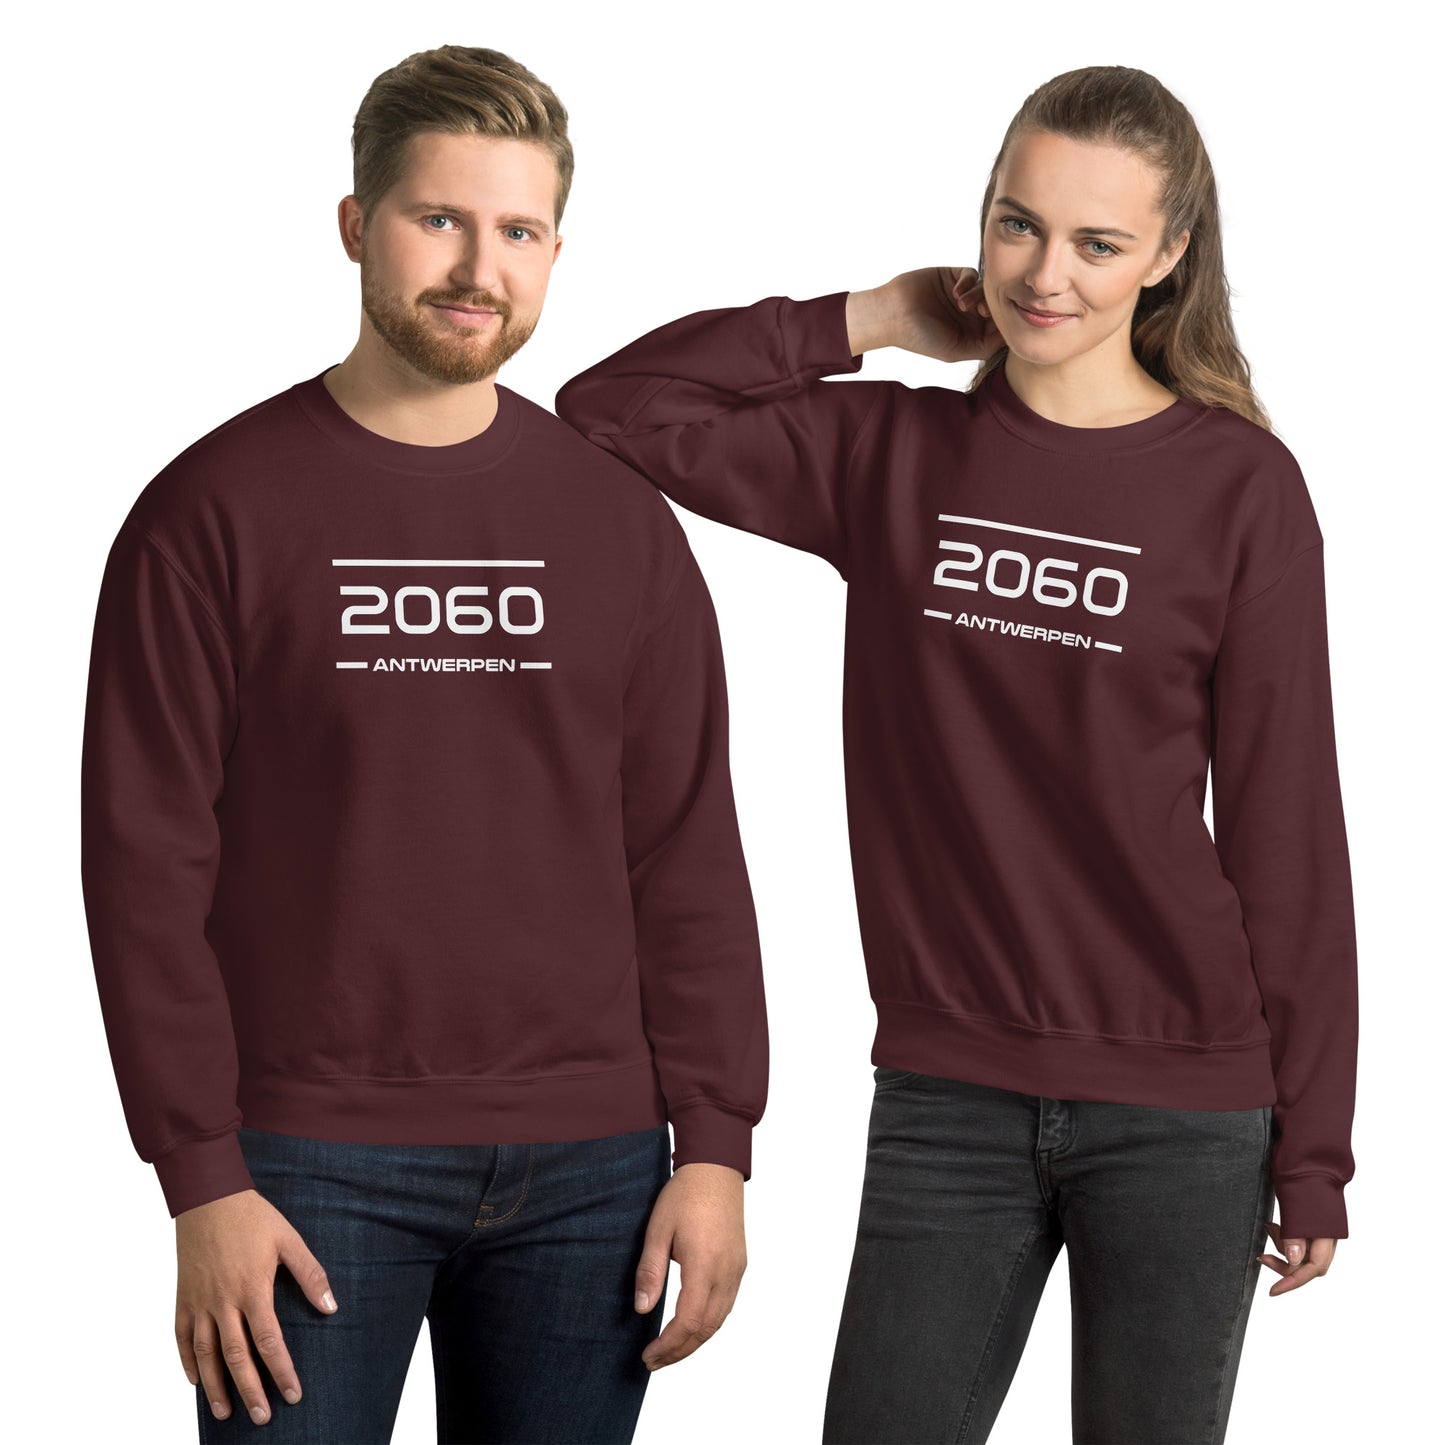 Sweater - 2060 - Antwerpen (M/V)